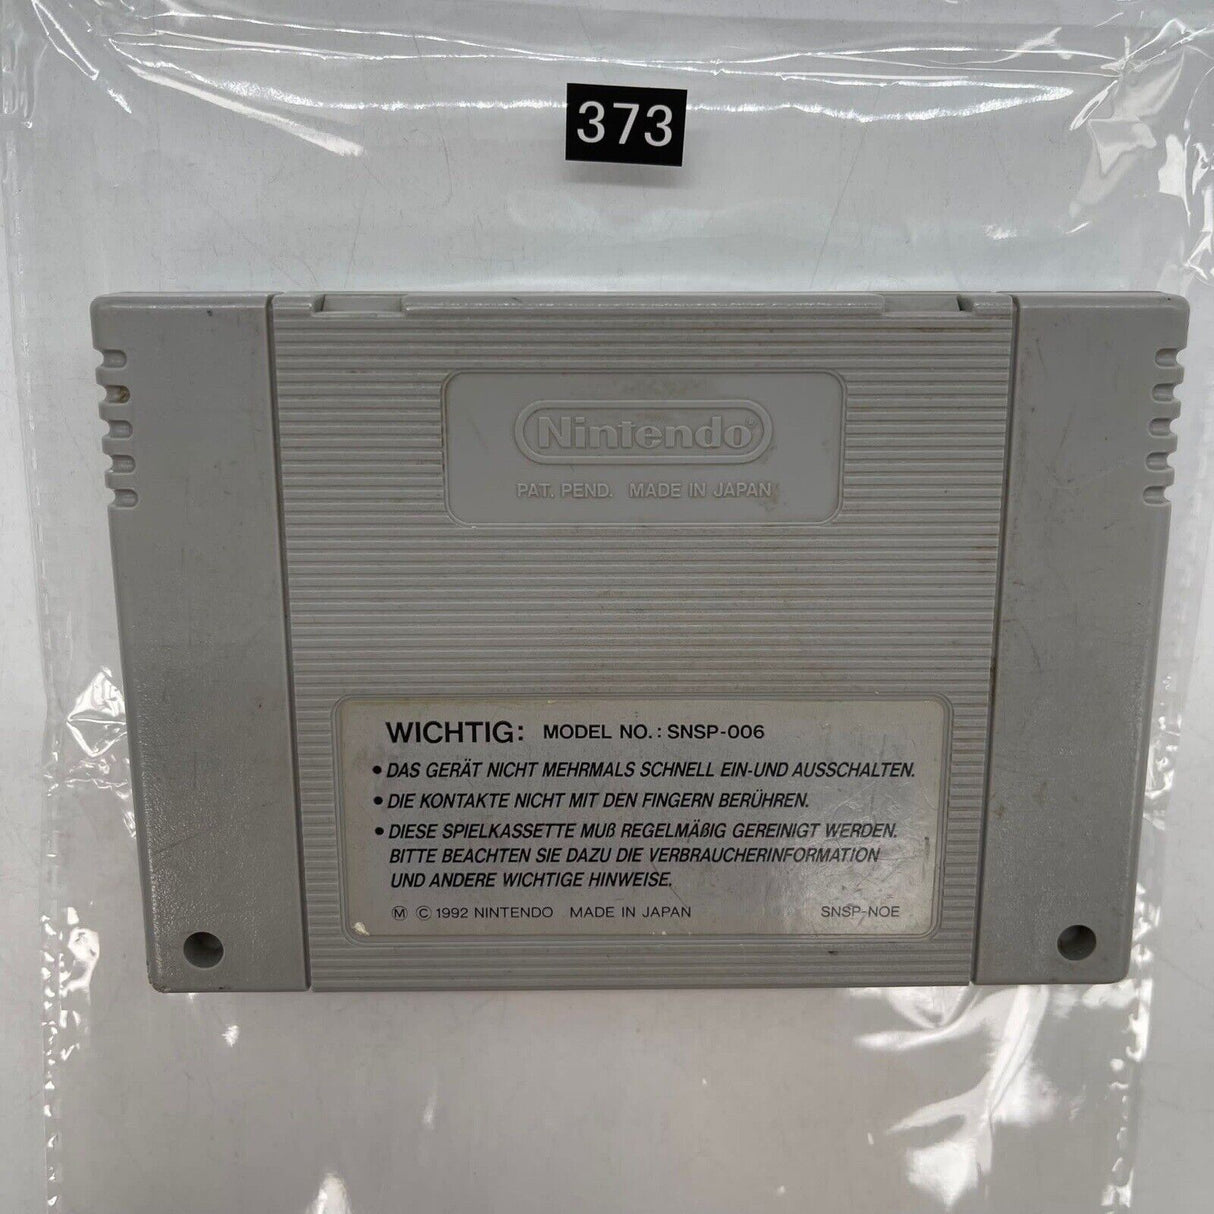 Shaq Fu Super Nintendo SNES Game Cartridge PAL